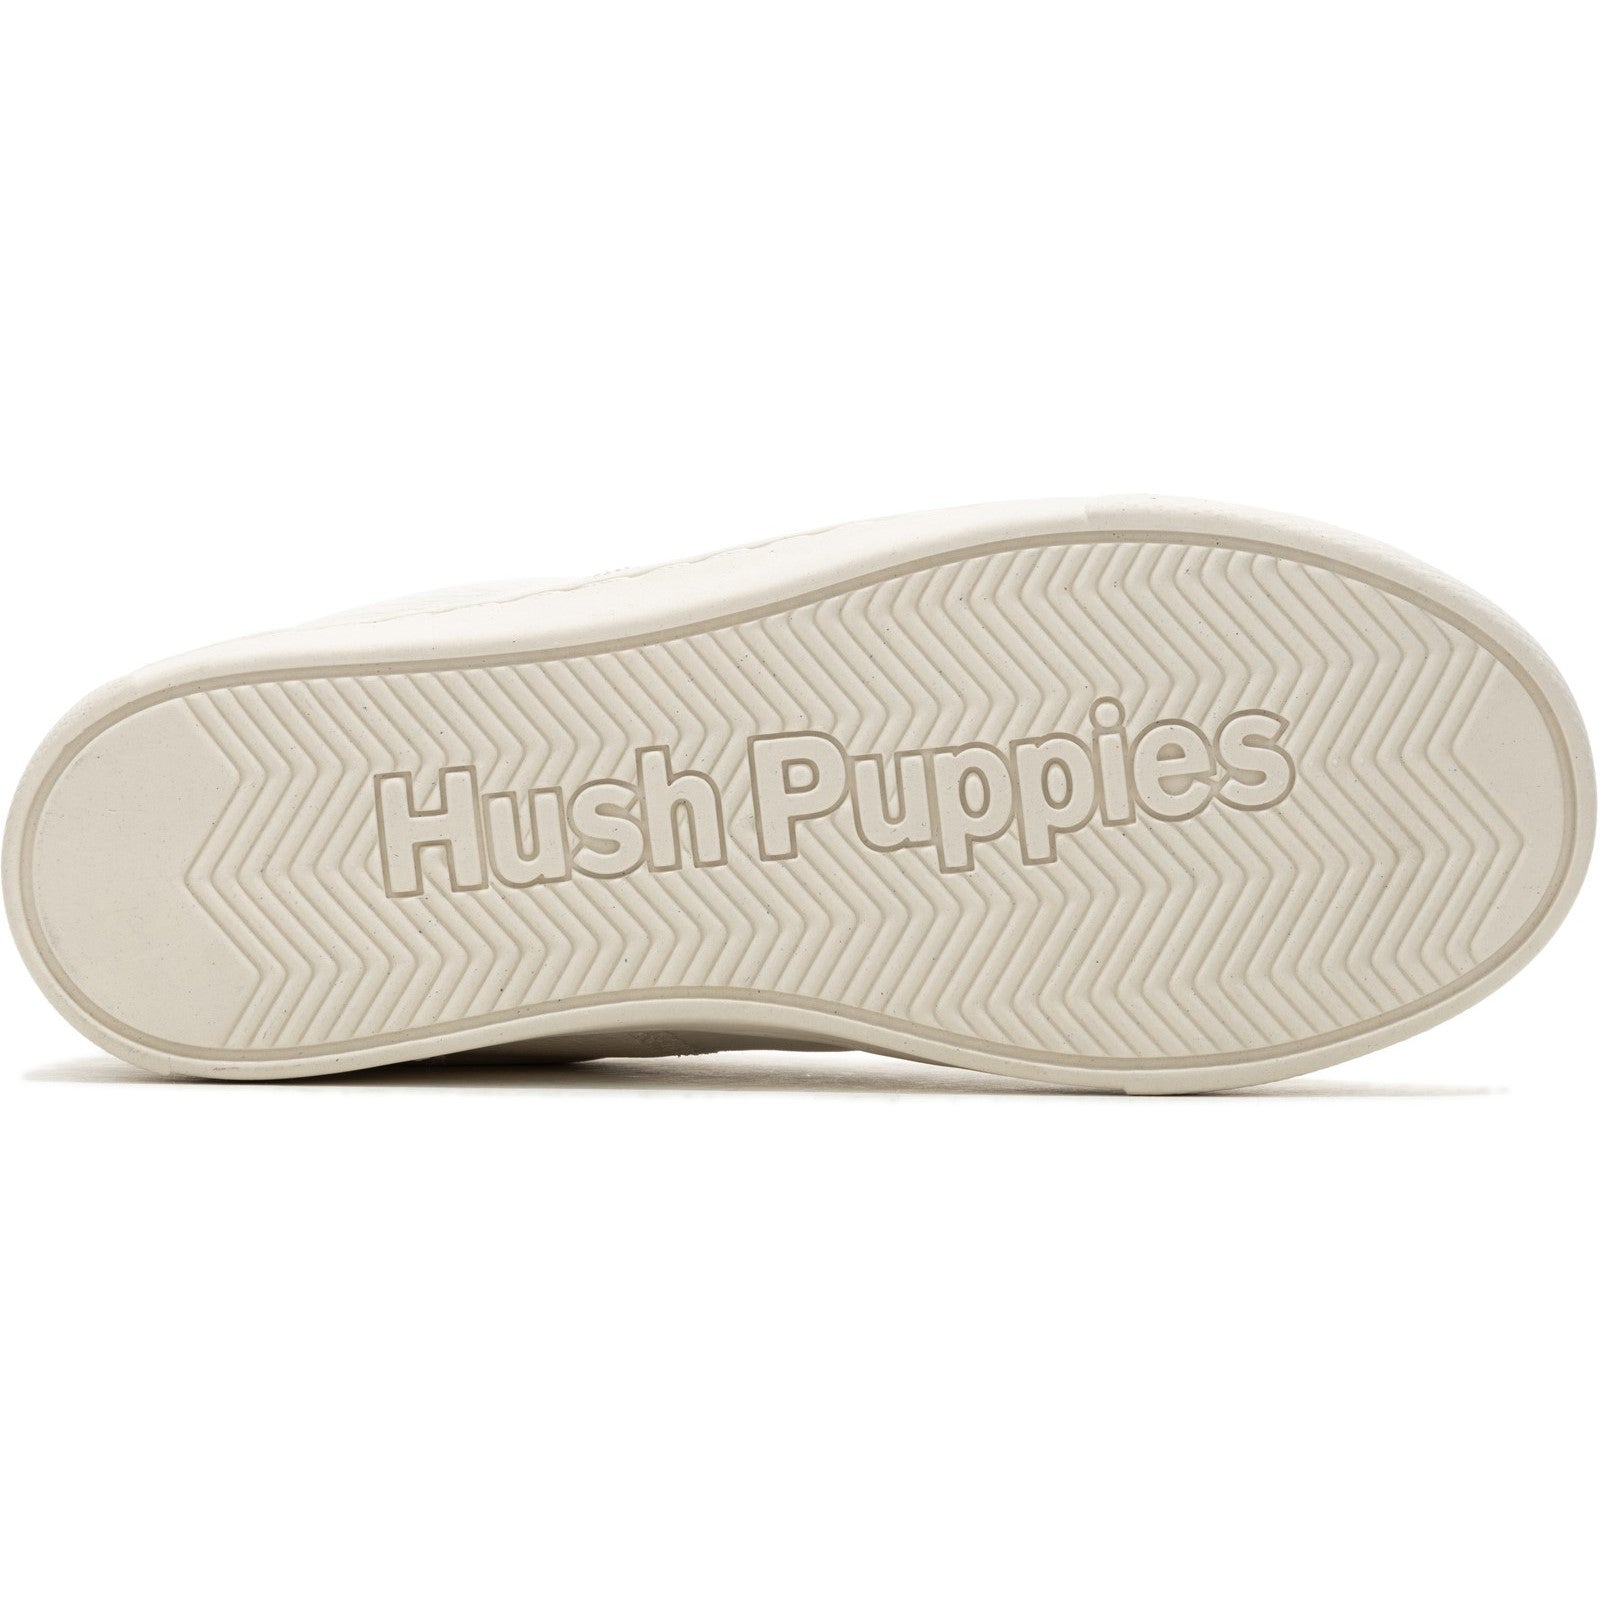 Hush Puppies Womens The Good Trainers - White